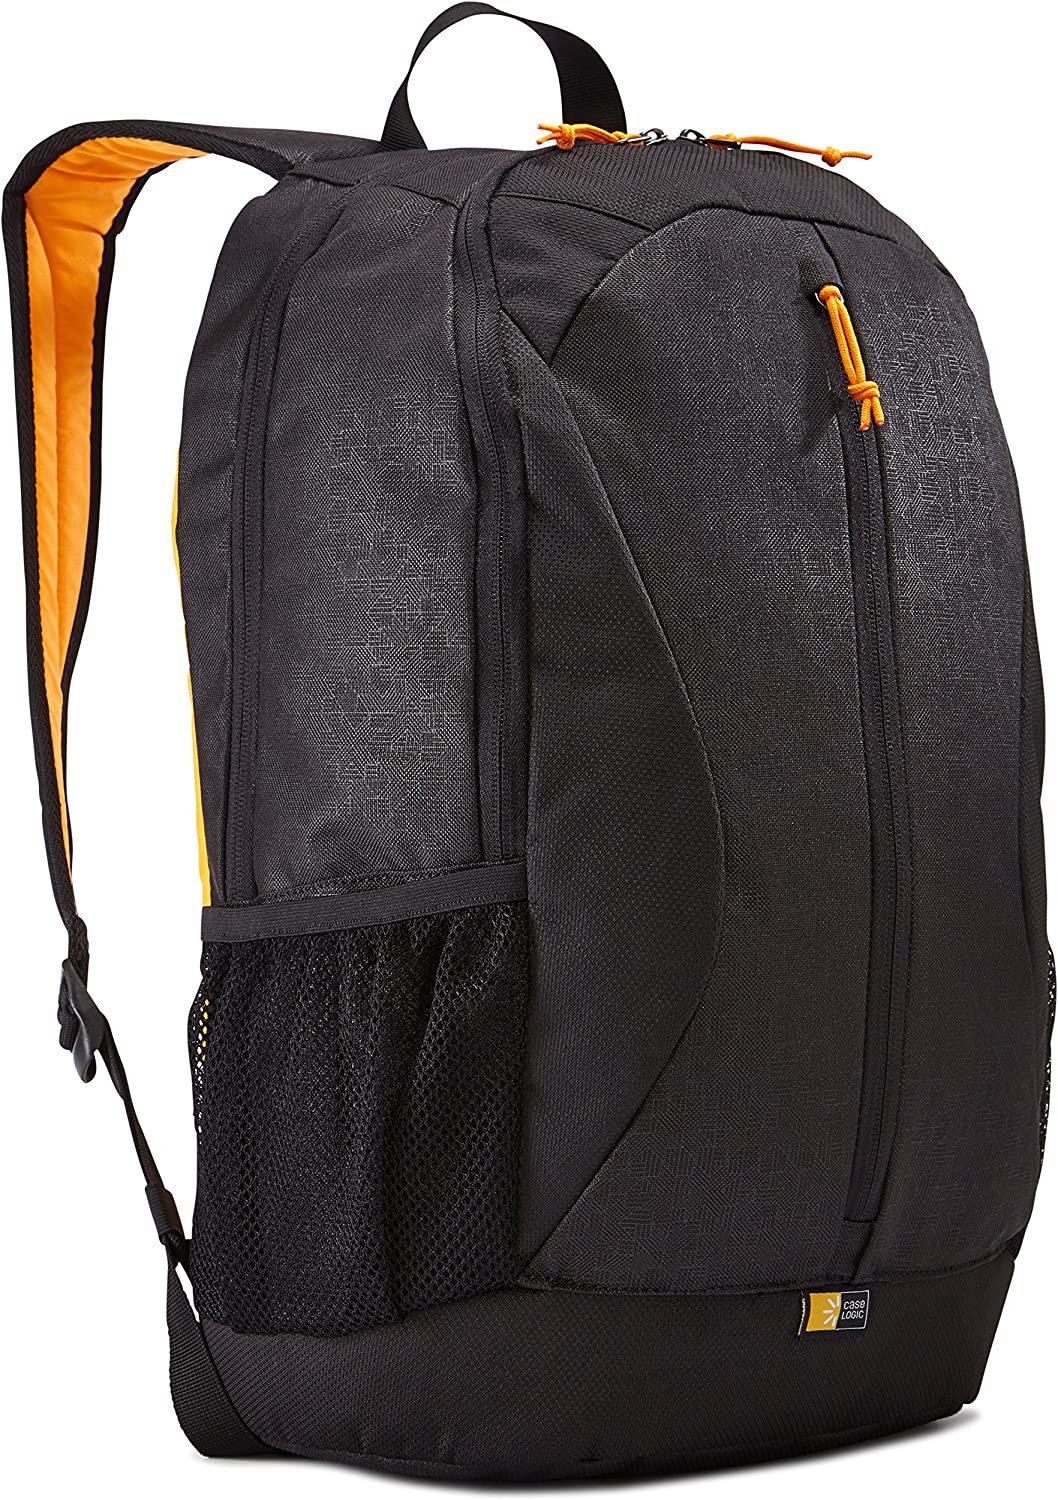 Case Logic Ibira Backpack IBIR-115Blk Laptops 15.6" & iPad 10.1" Tablet Pocket - Black - image 1 of 12